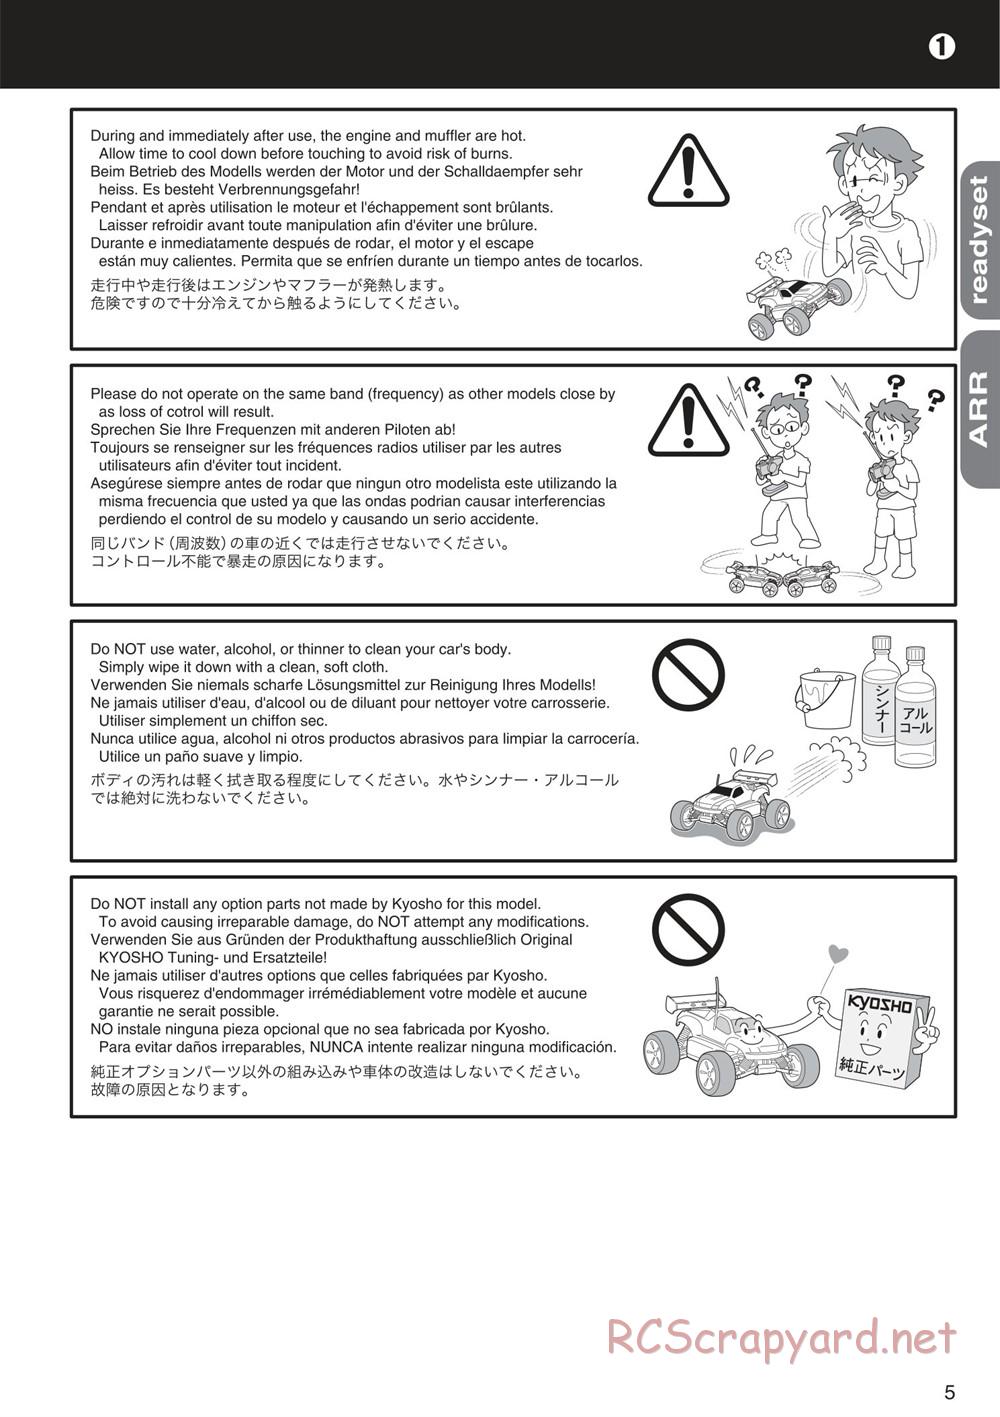 Kyosho - Mini Inferno ST 09 - Manual - Page 5